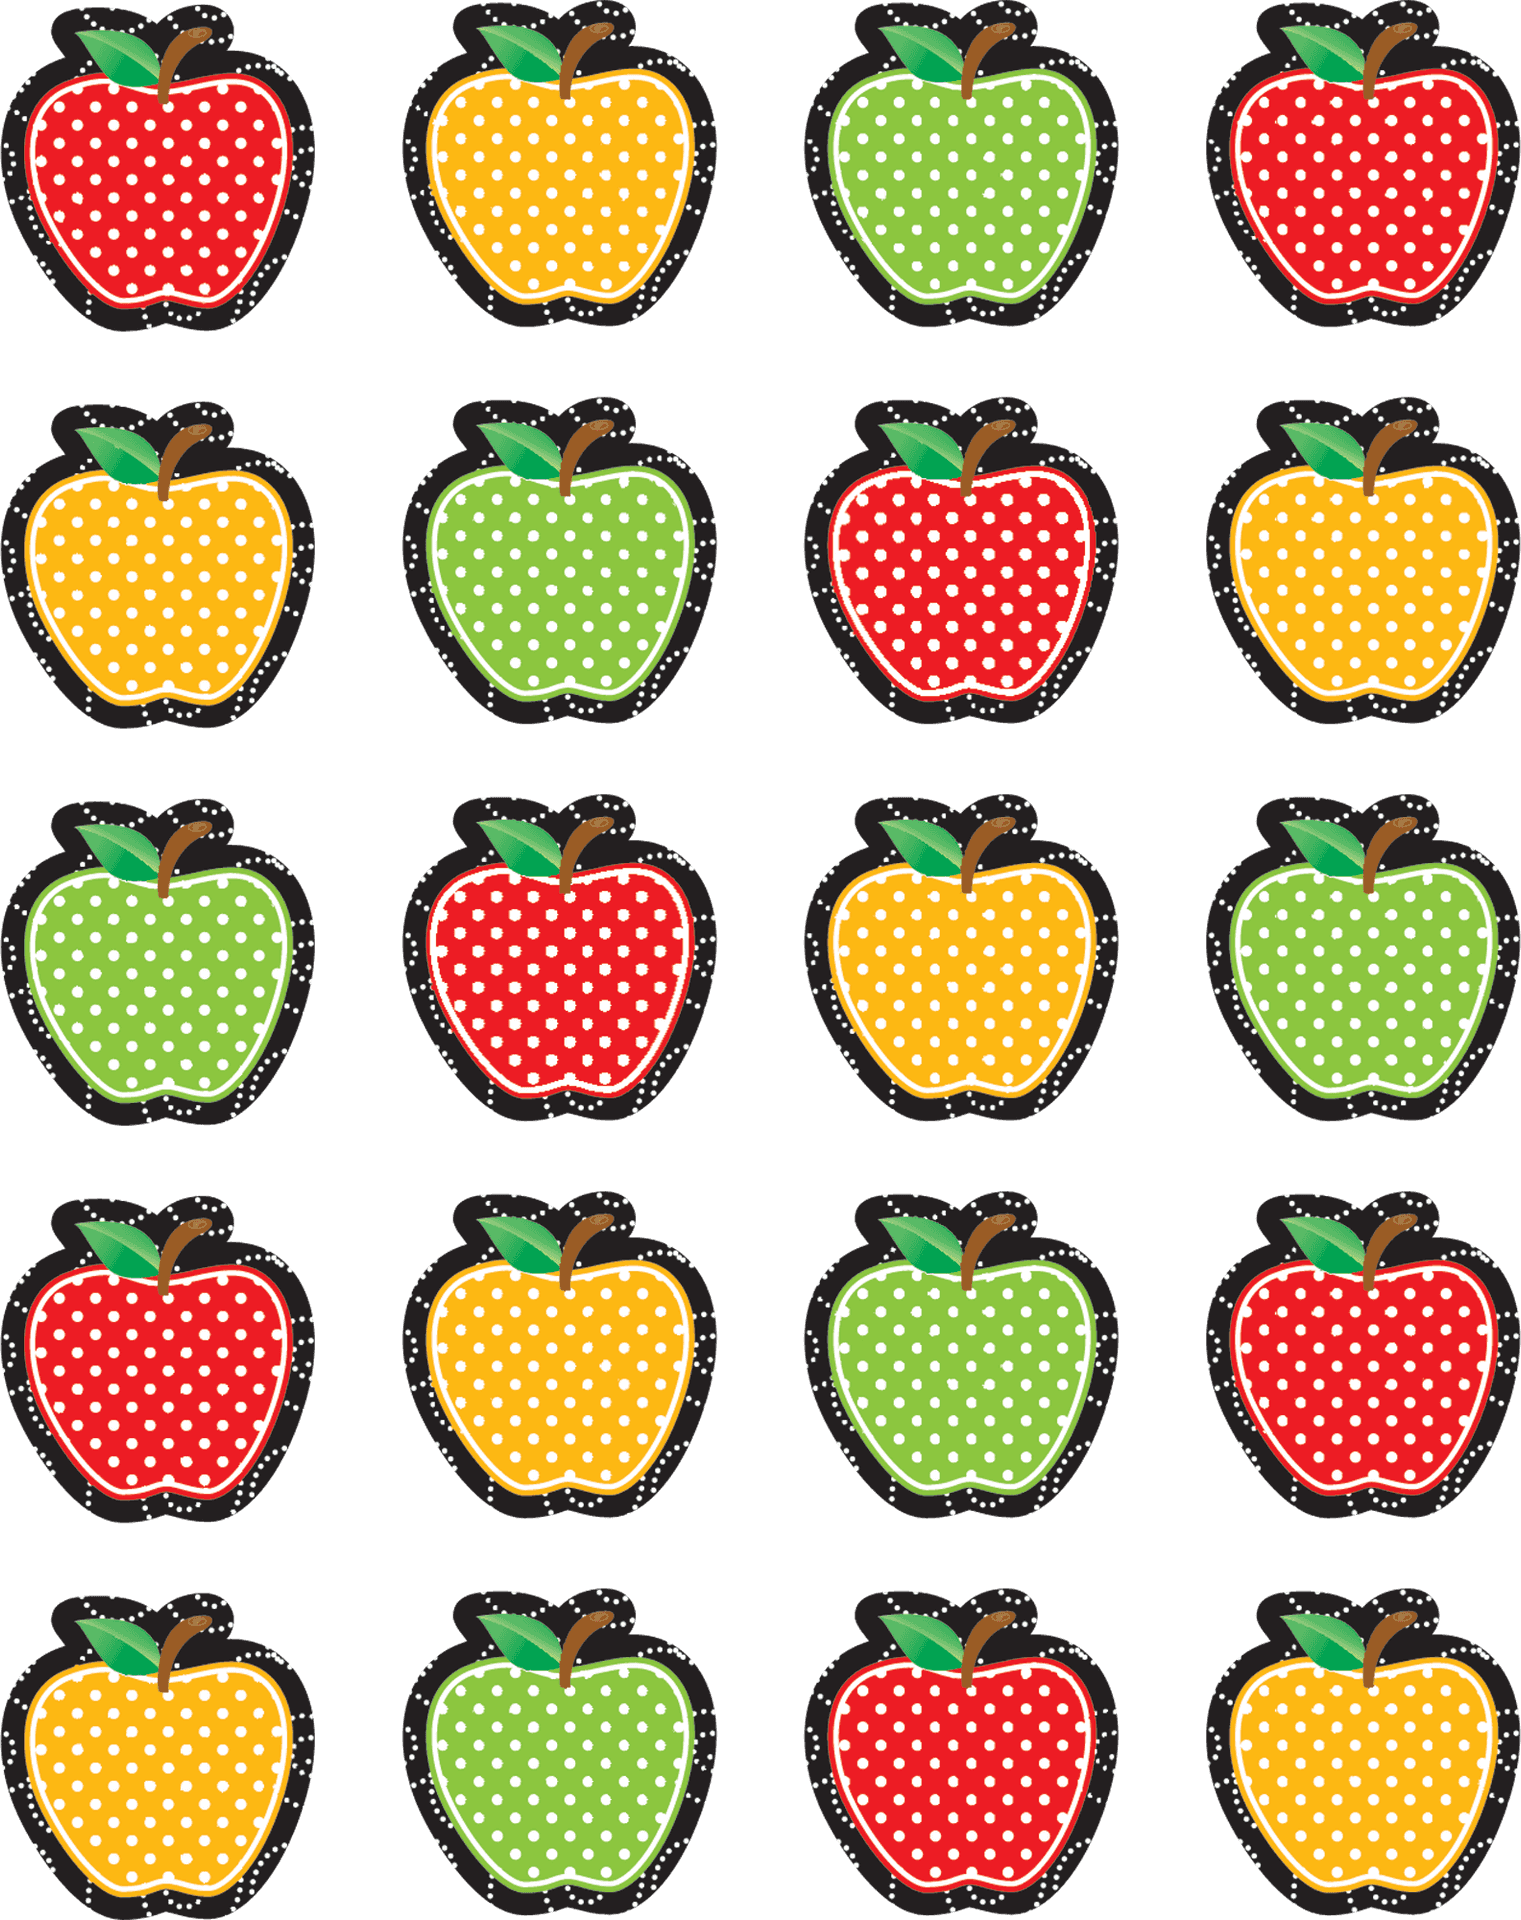 Colorful Polka Dot Apples Pattern PNG image